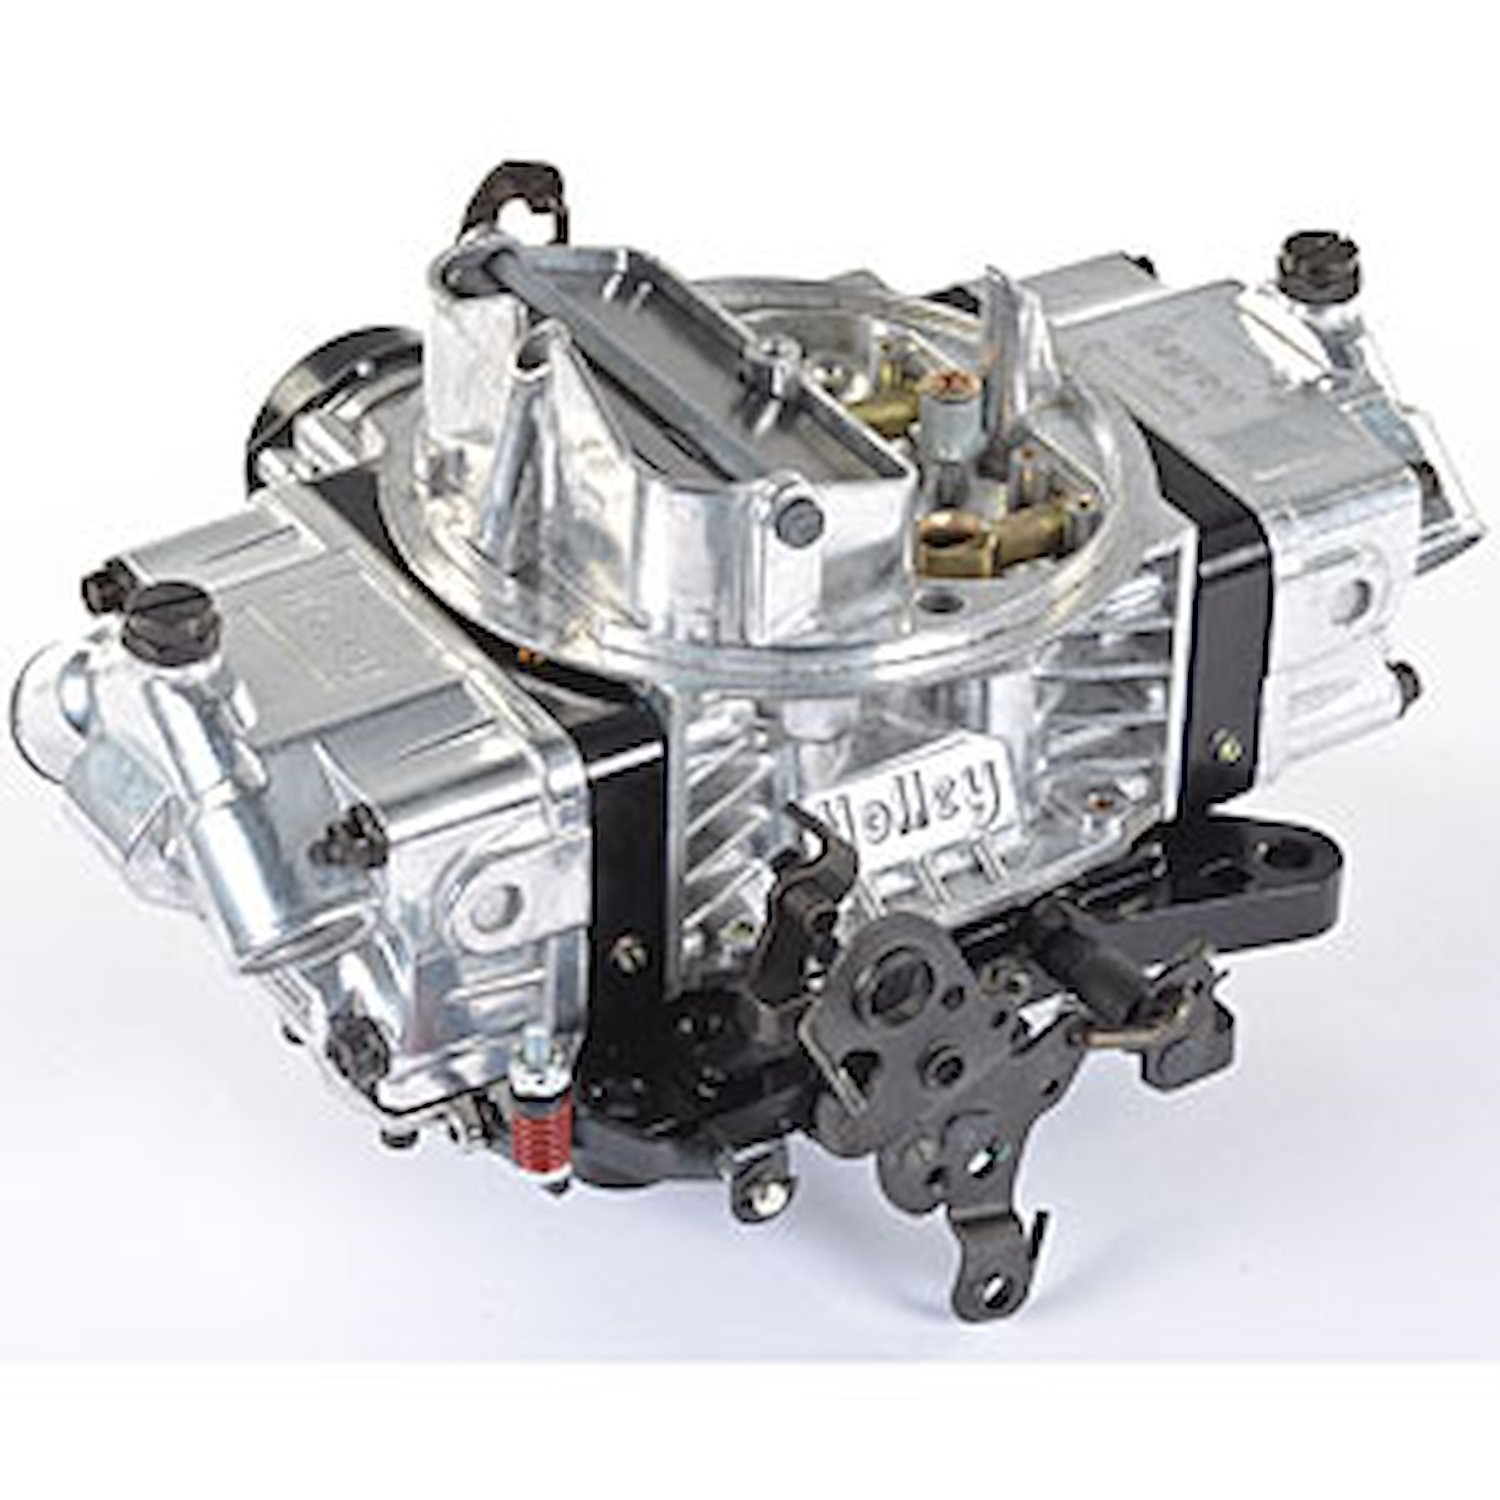 0-76650BK Ultra Double Pumper Carburetor 650 cfm